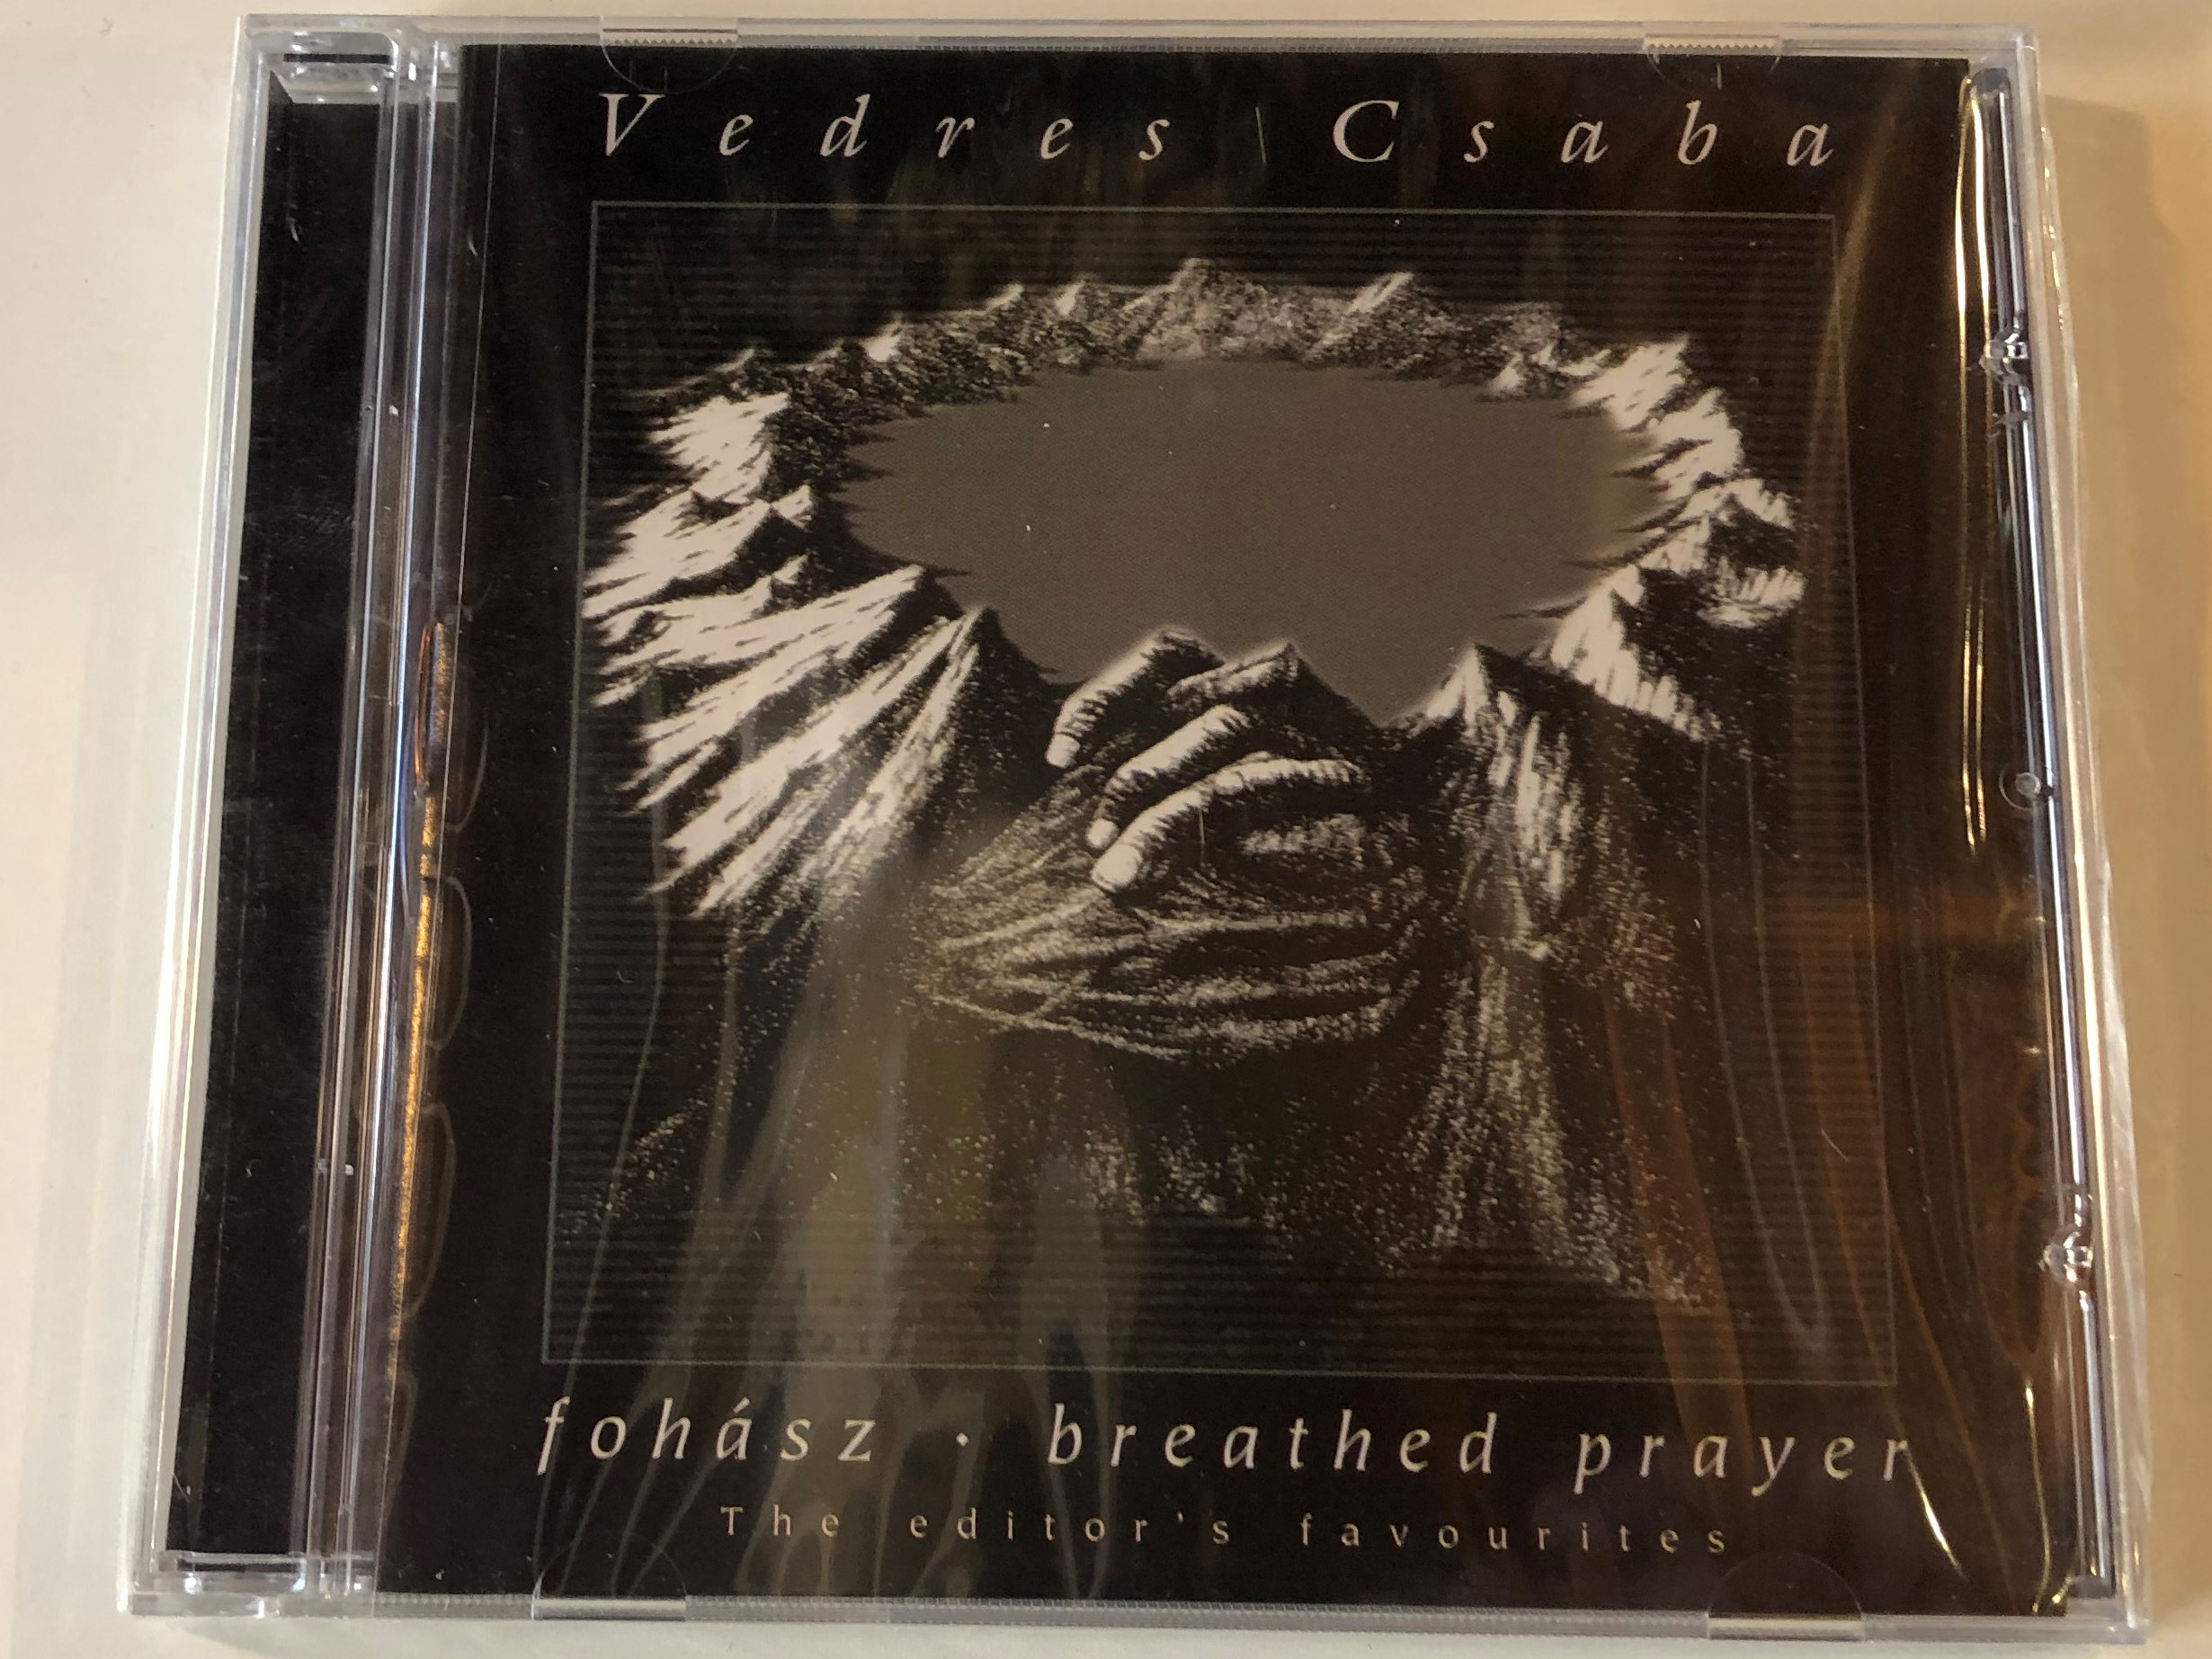 vedres-csaba-fohasz-breathed-prayer-the-editor-s-favourites-periferic-records-audio-cd-2000-bgcd-127-1-.jpg